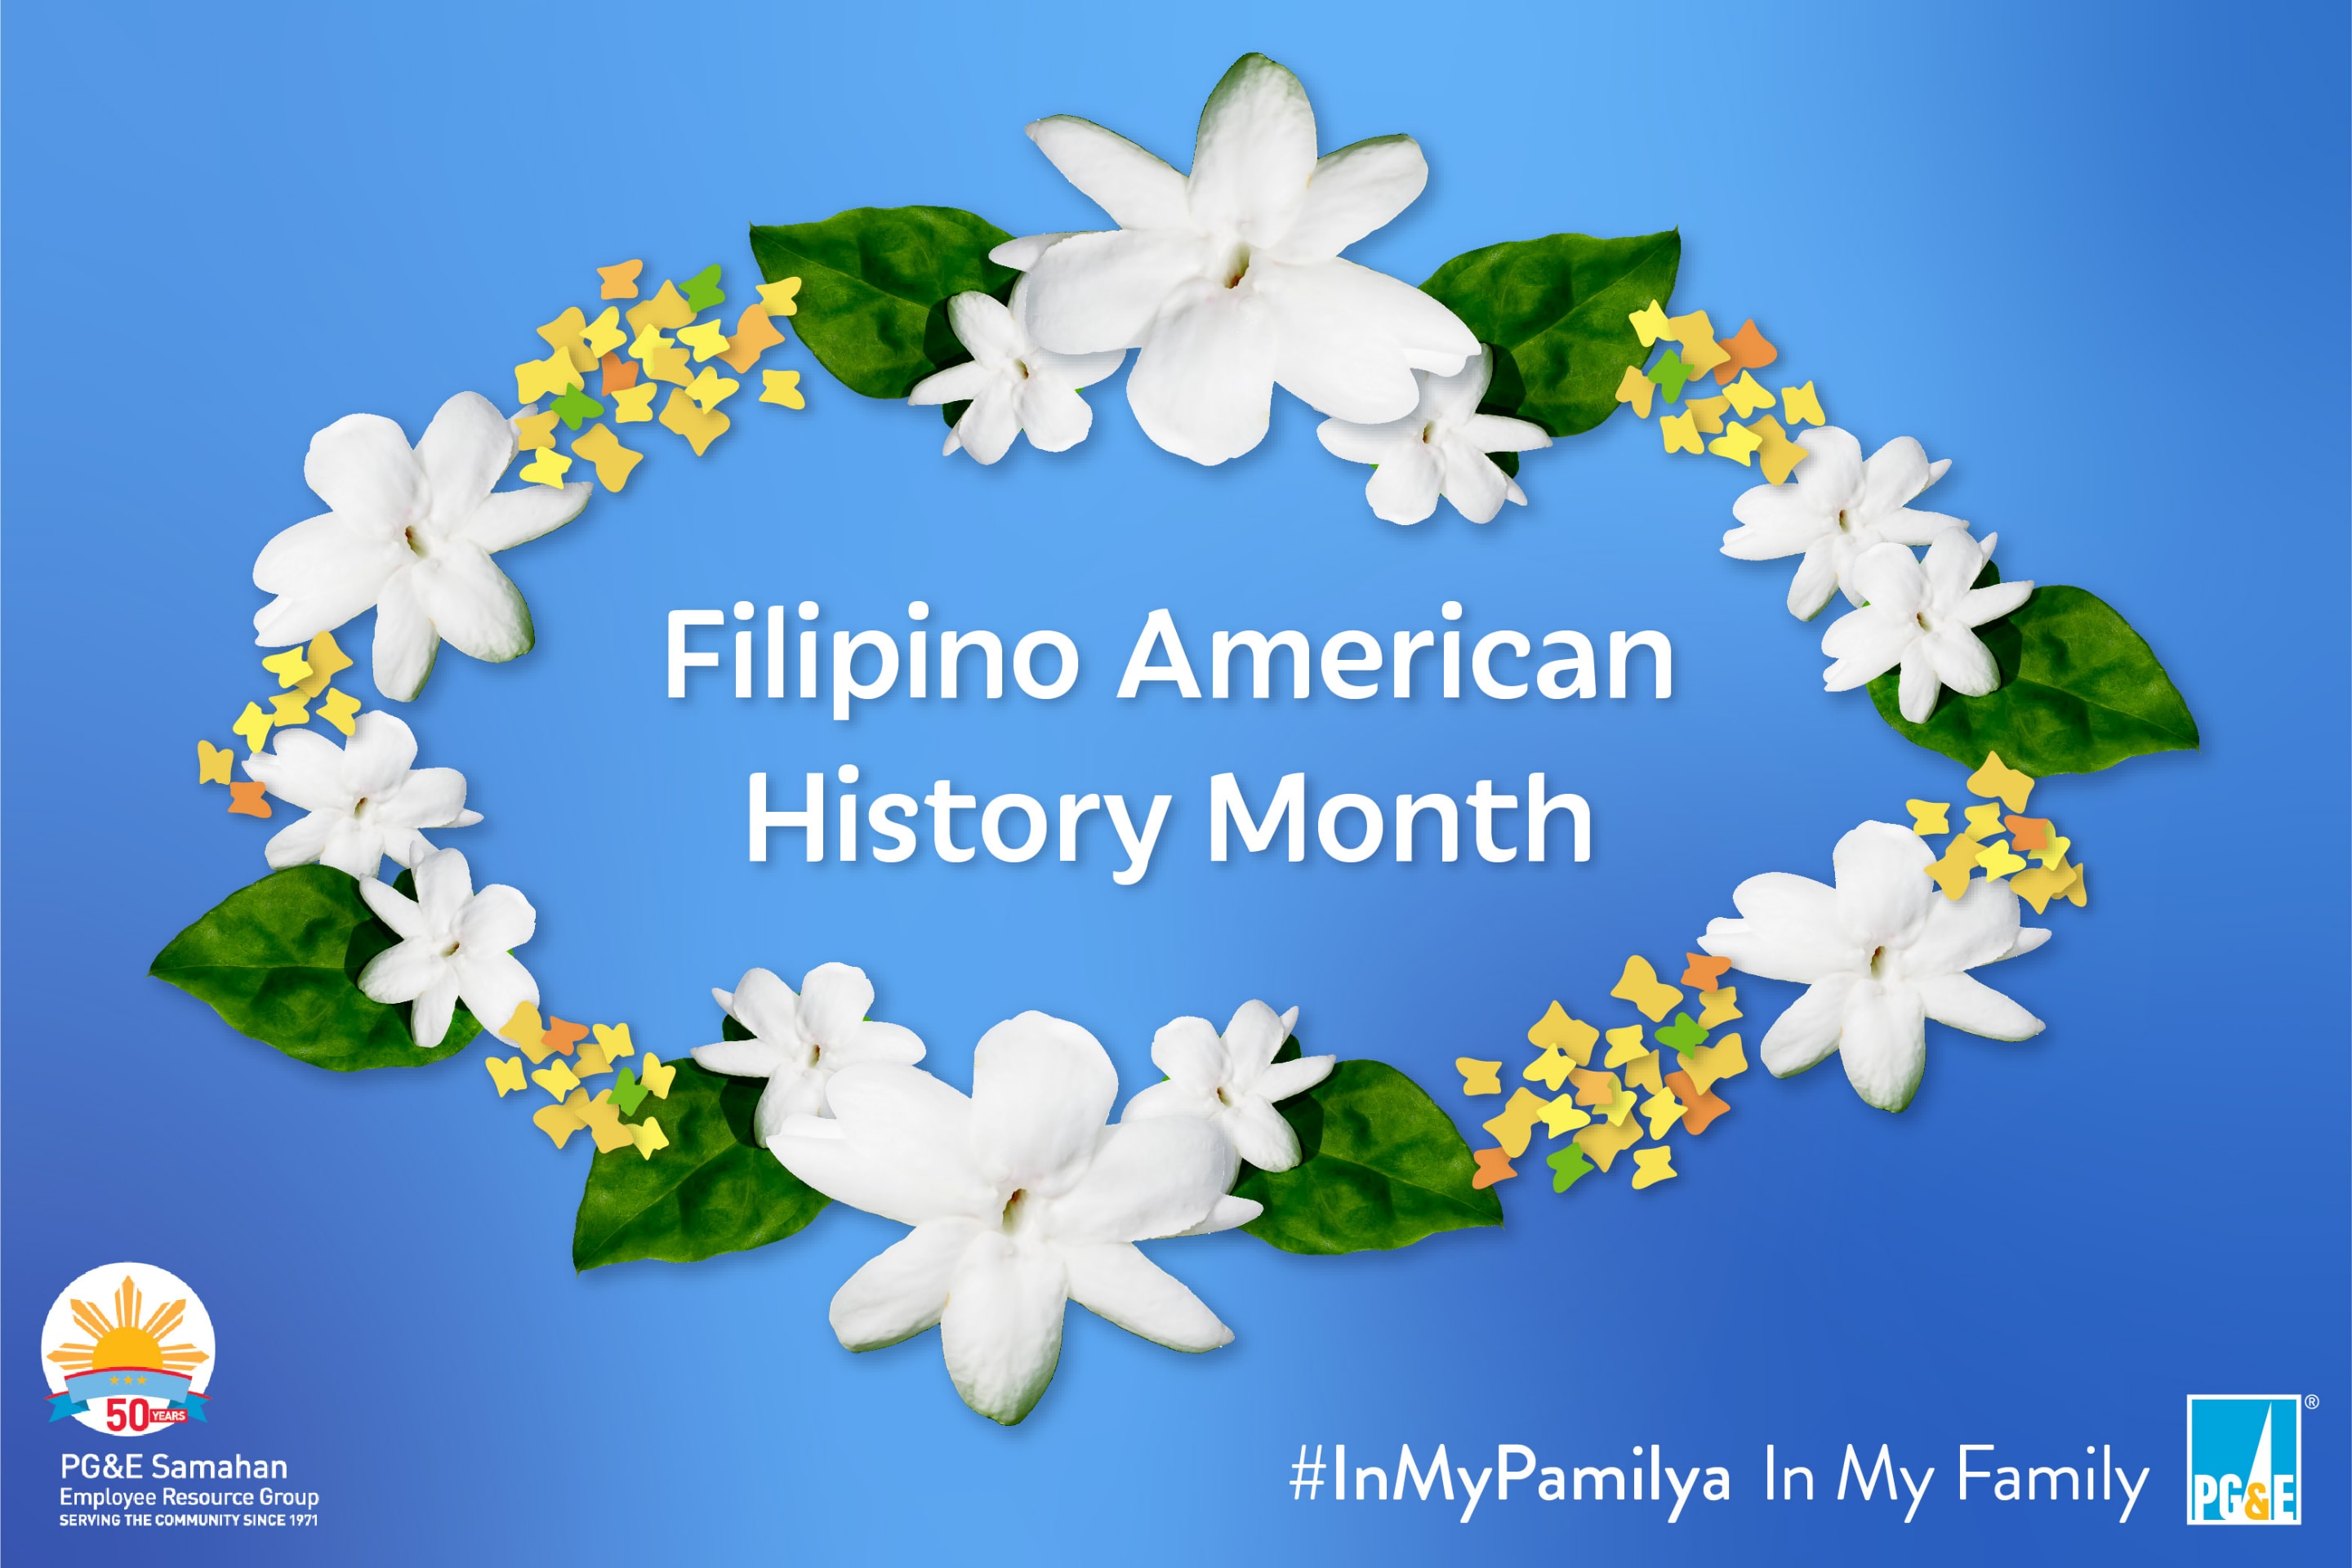 #InMyPamilya (In My Family): Celebrating Filipino American History Month